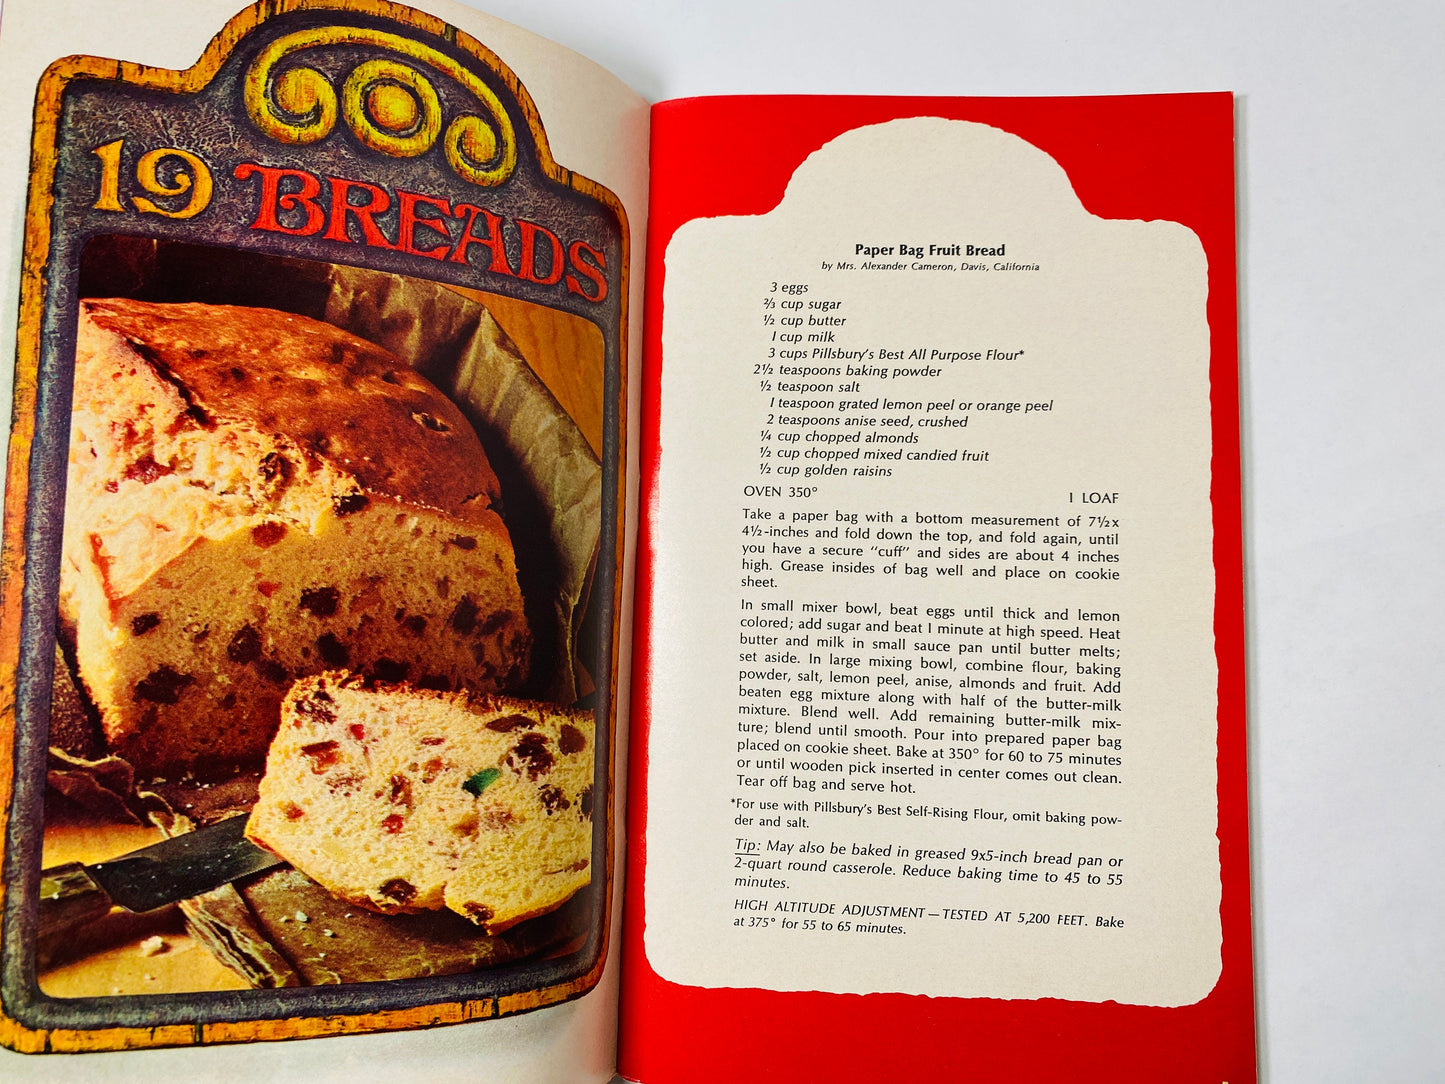 Pillsbury Vintage Baking Recipe cookbook booklet circa 1968 by Ann Pillsbury. Kitchen retro decor.